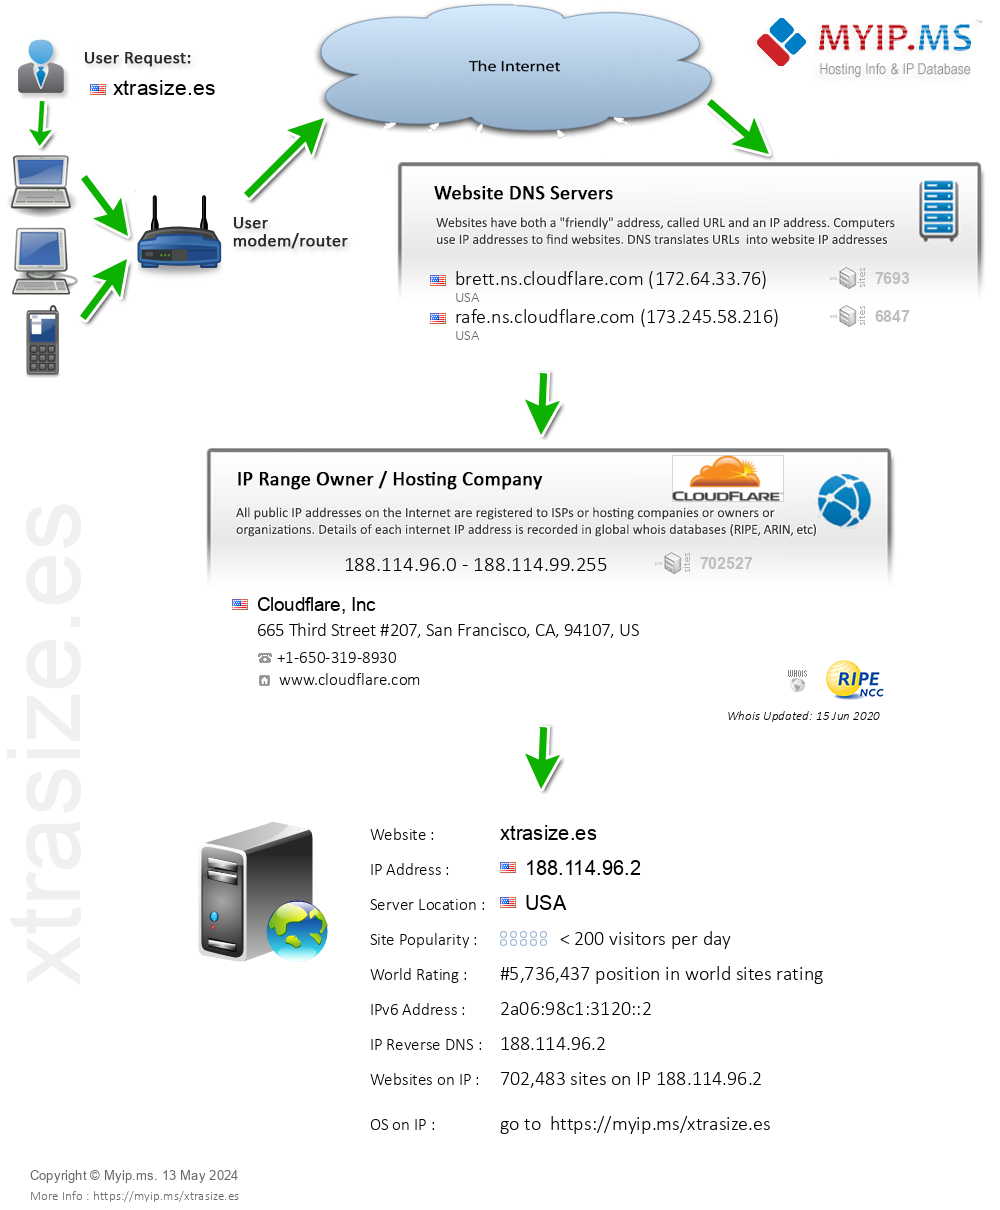 Xtrasize.es - Website Hosting Visual IP Diagram